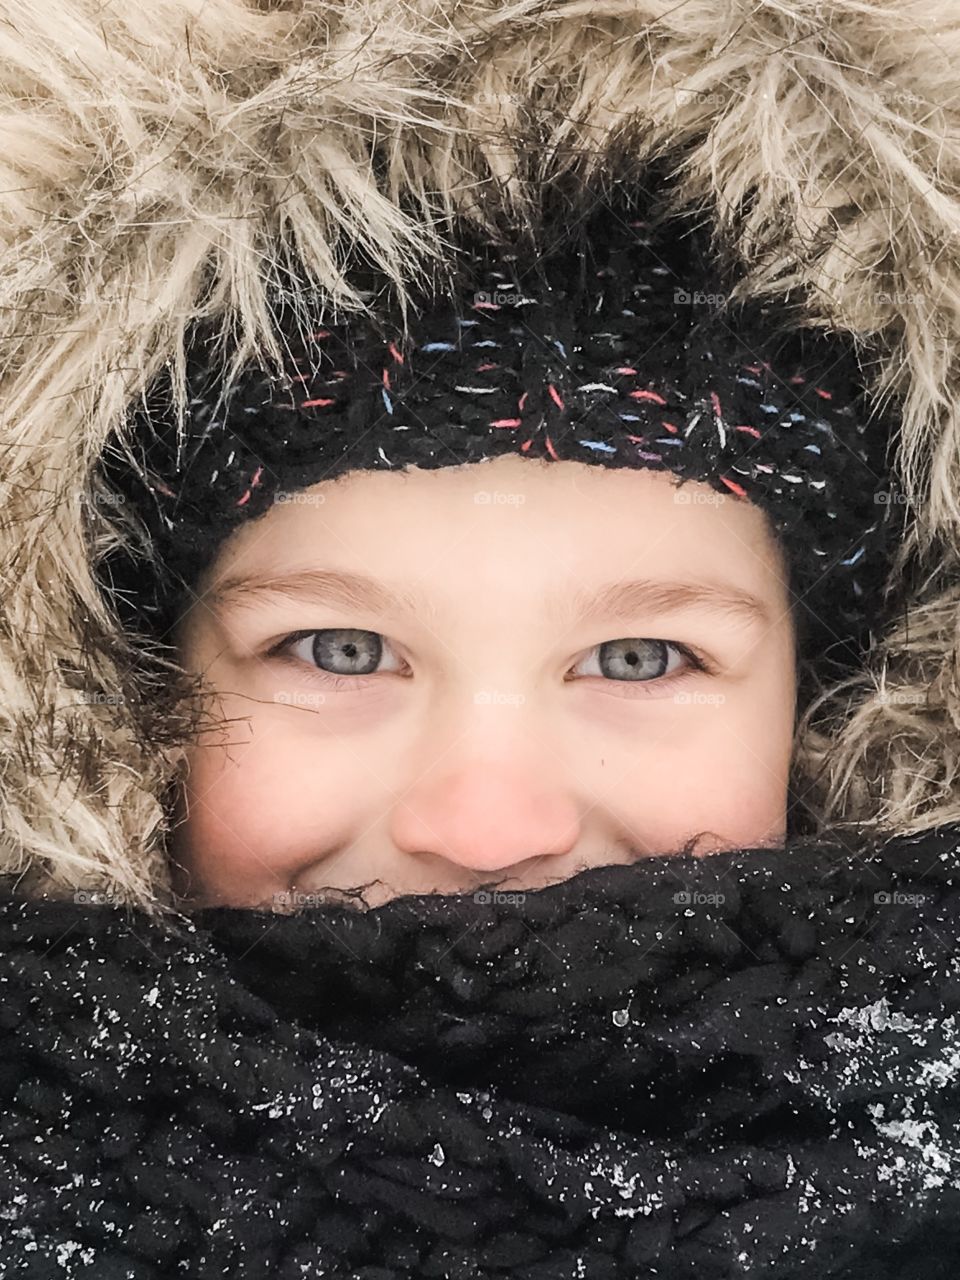 Blue eyes boy bundled up in winter